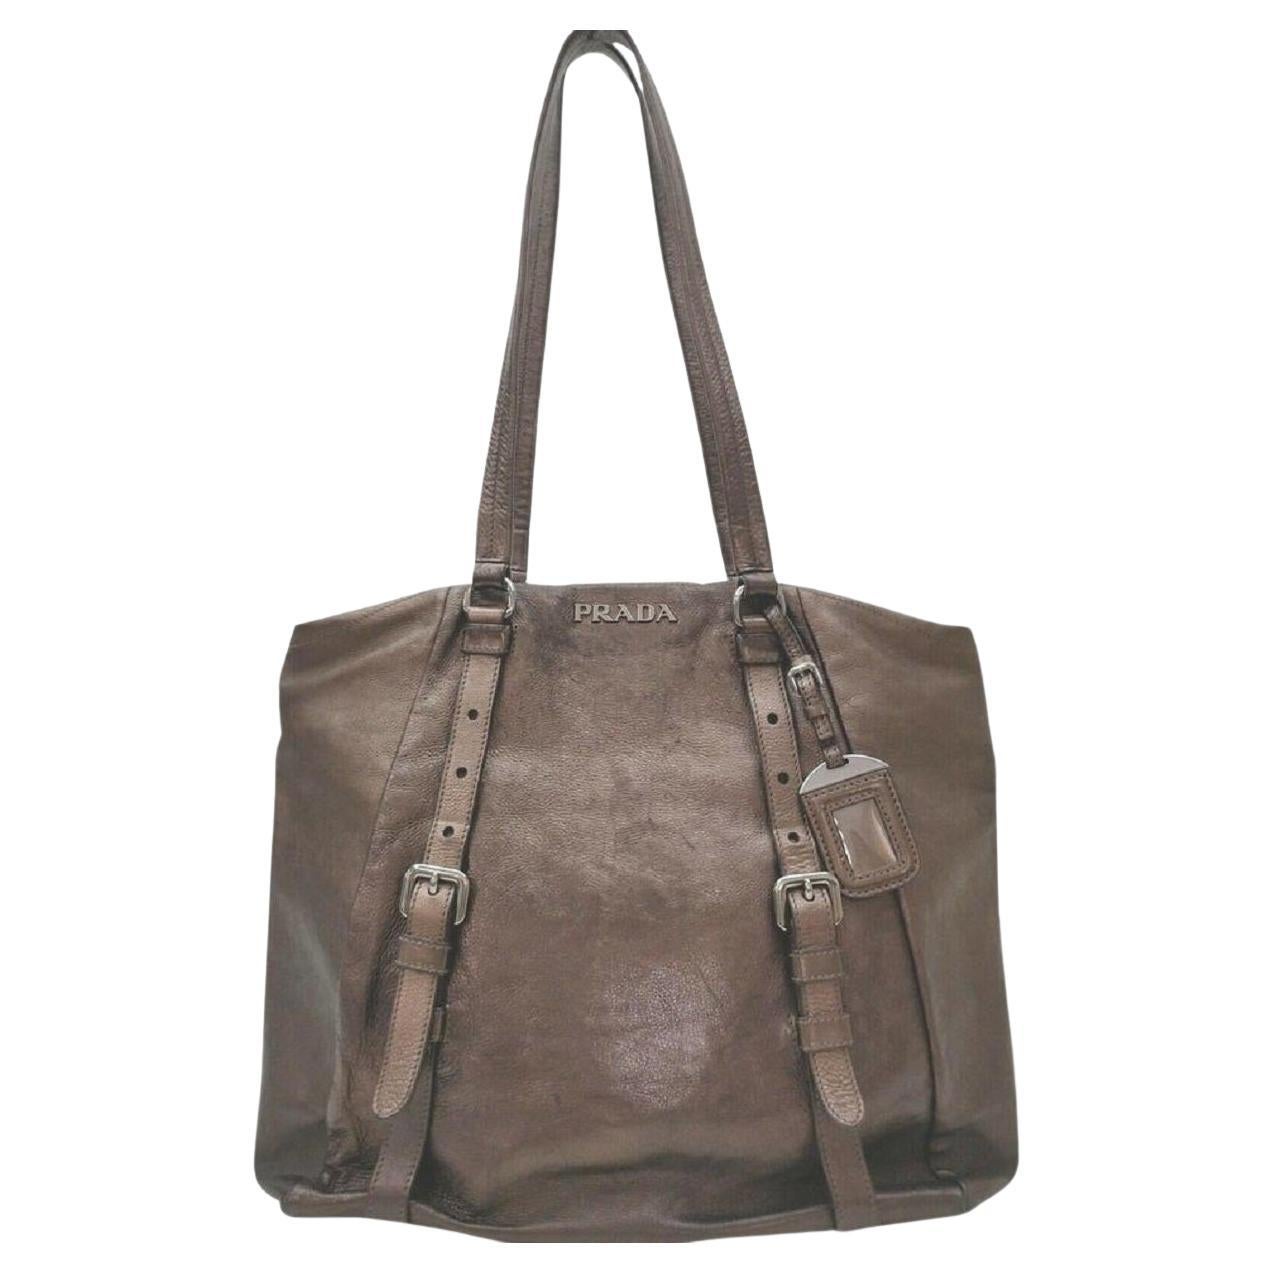 Prada Brown Leather Shopper Tote Bag 863019